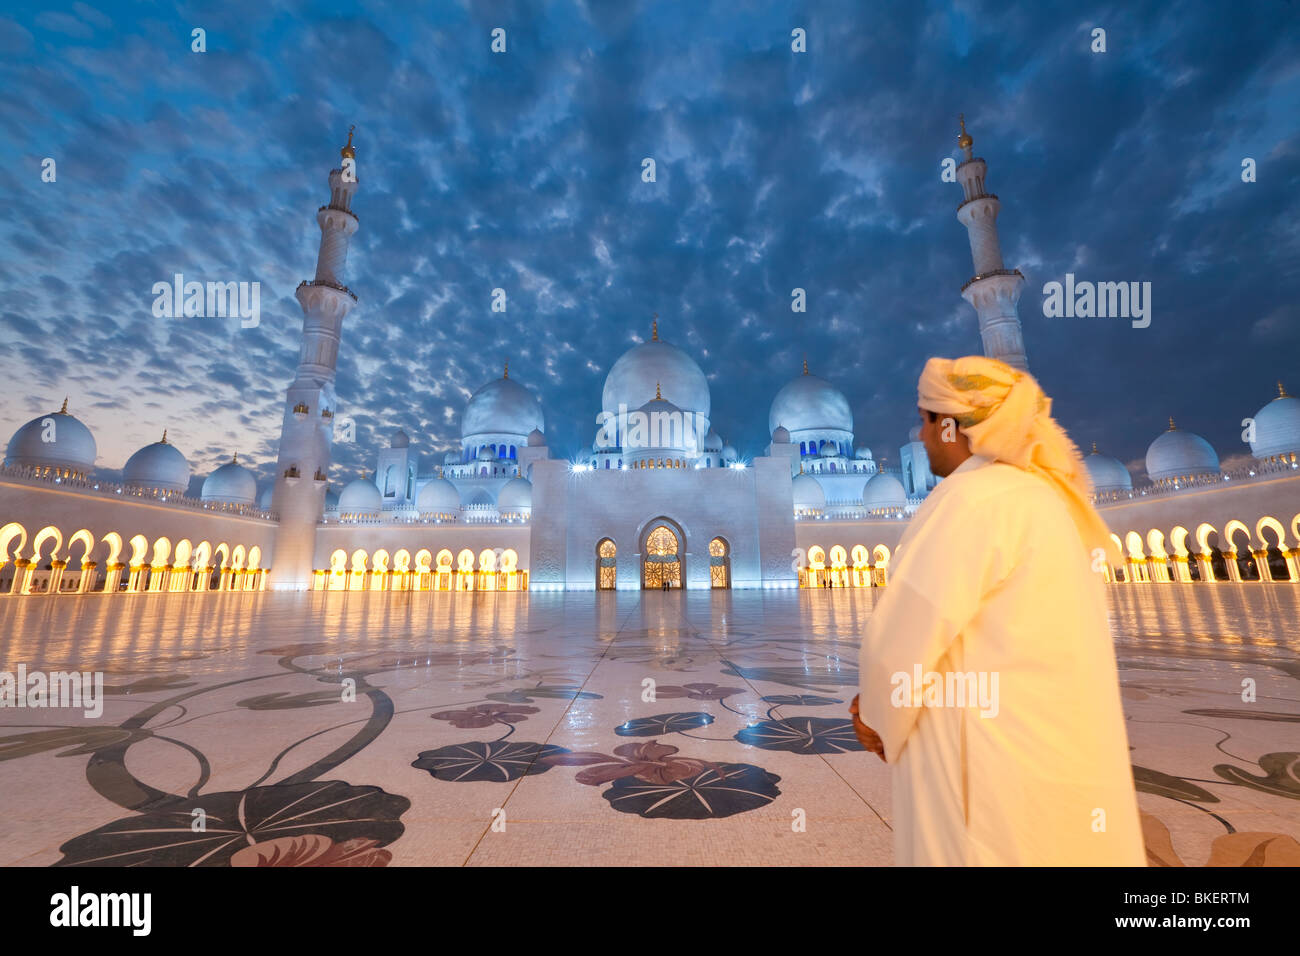 El Jeque Zayed Bin Sultan Al Nahyan Mezquita, Abu Dhabi, Emiratos Árabes Unidos, EAU - M.R Foto de stock